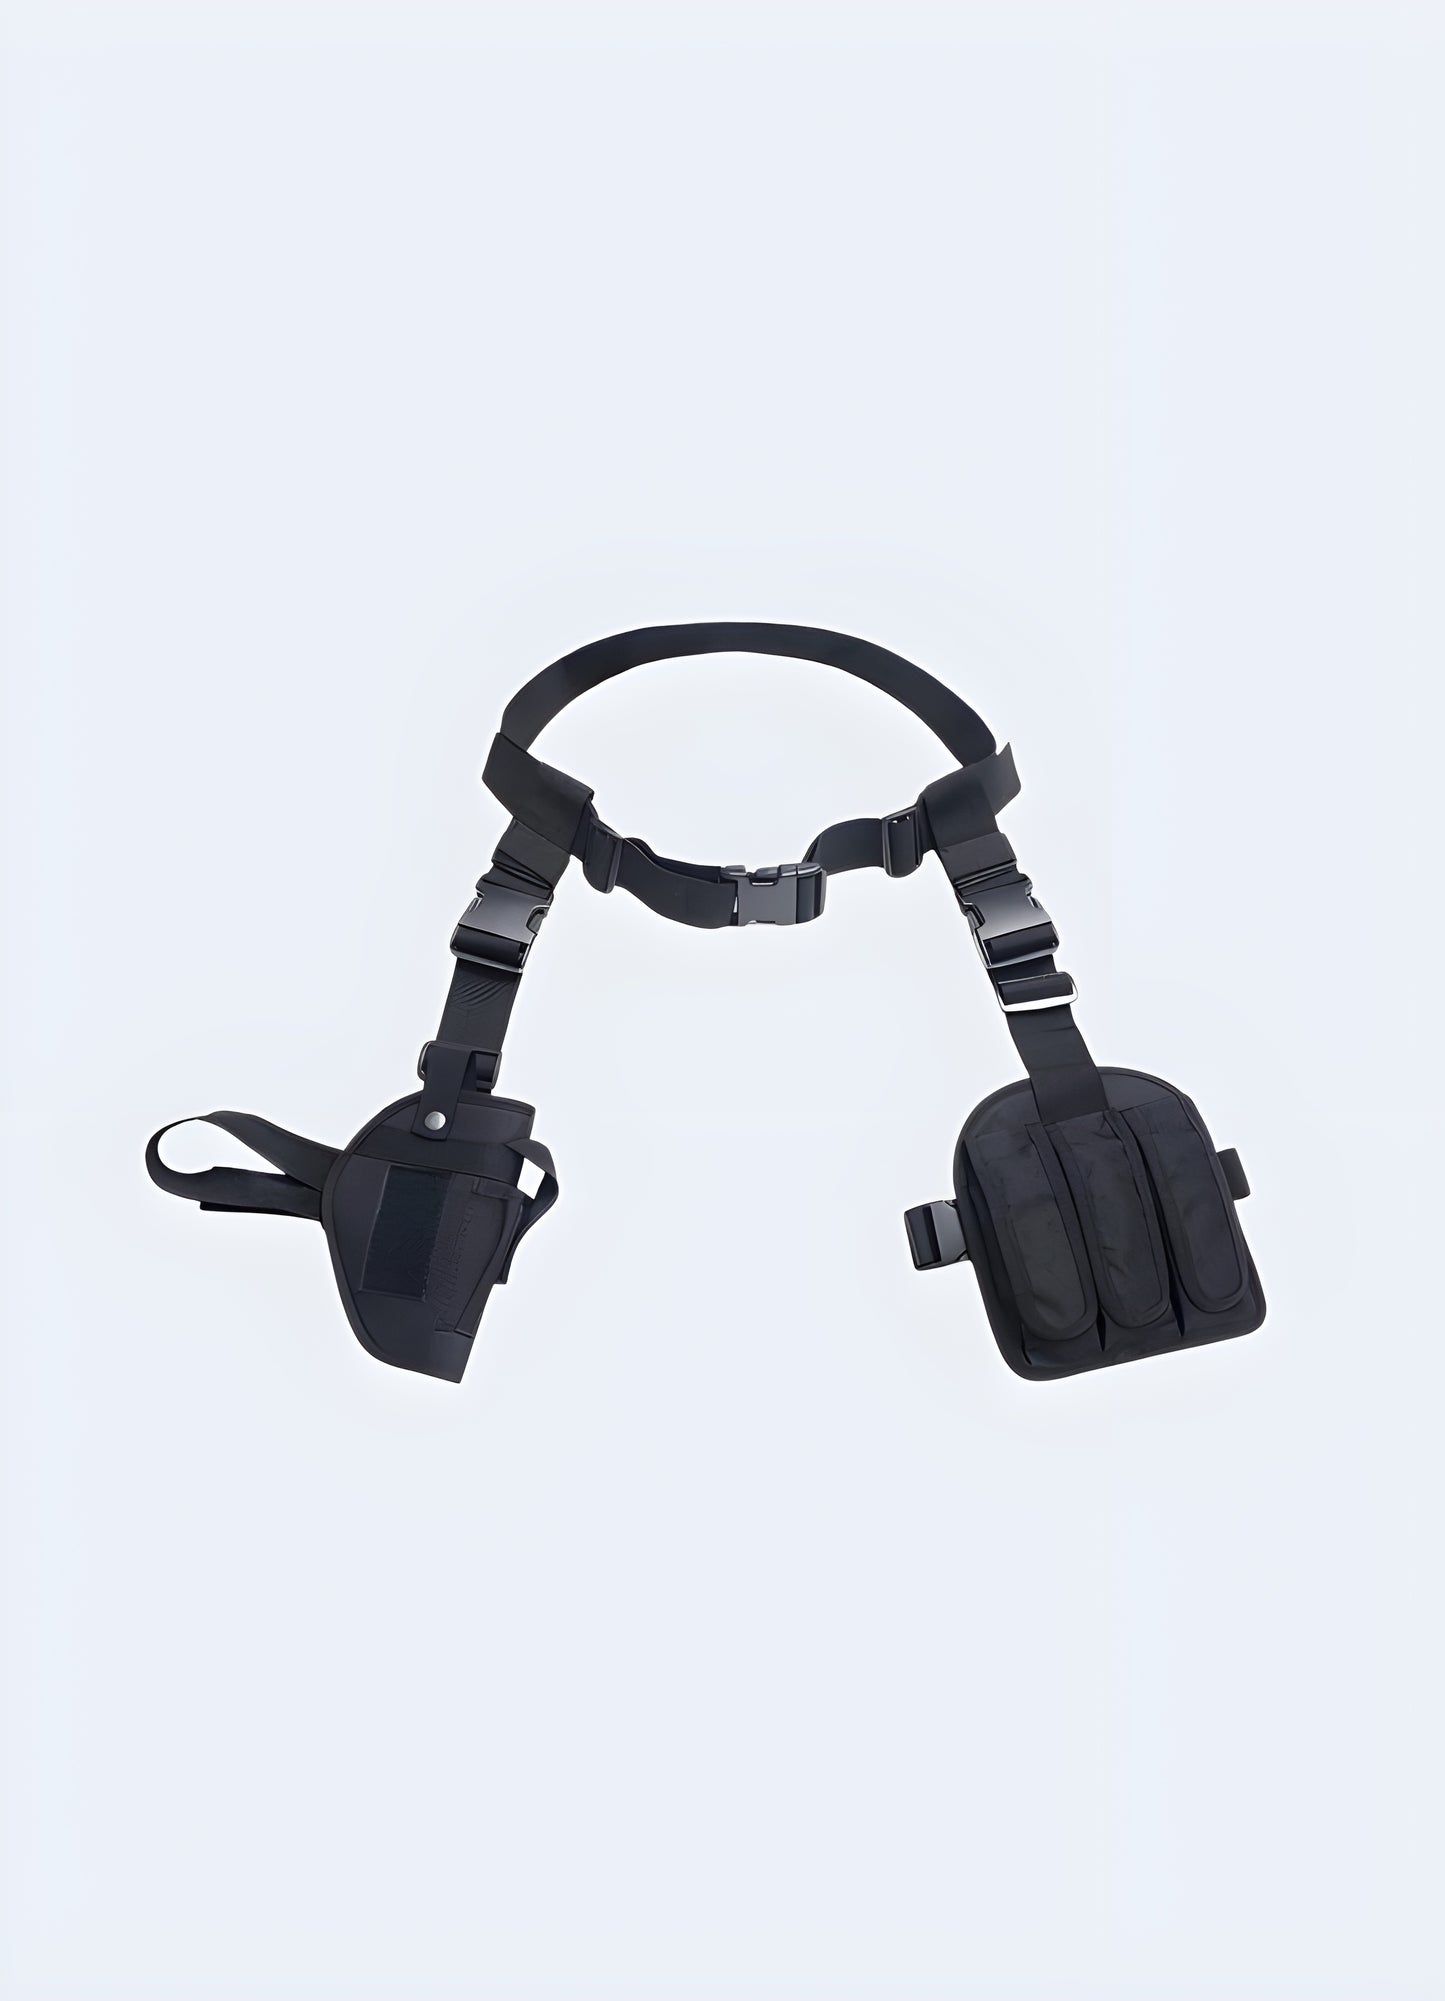 Futuristic straps design with adjustable buckles techwear straps.